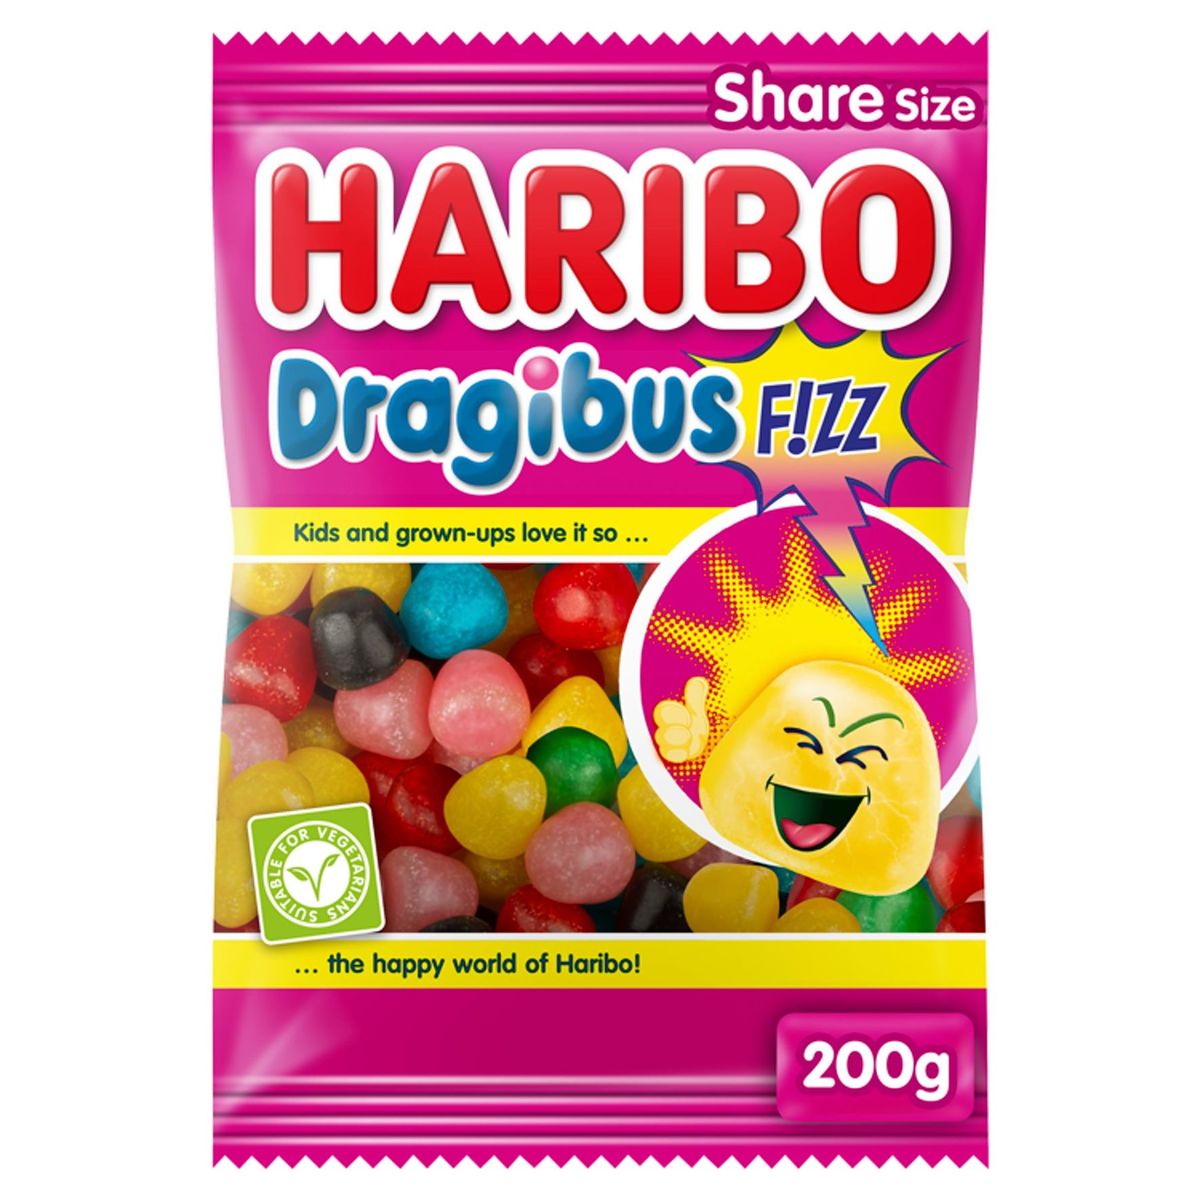 Haribo Dragibus F!ZZ Share Size 200 g